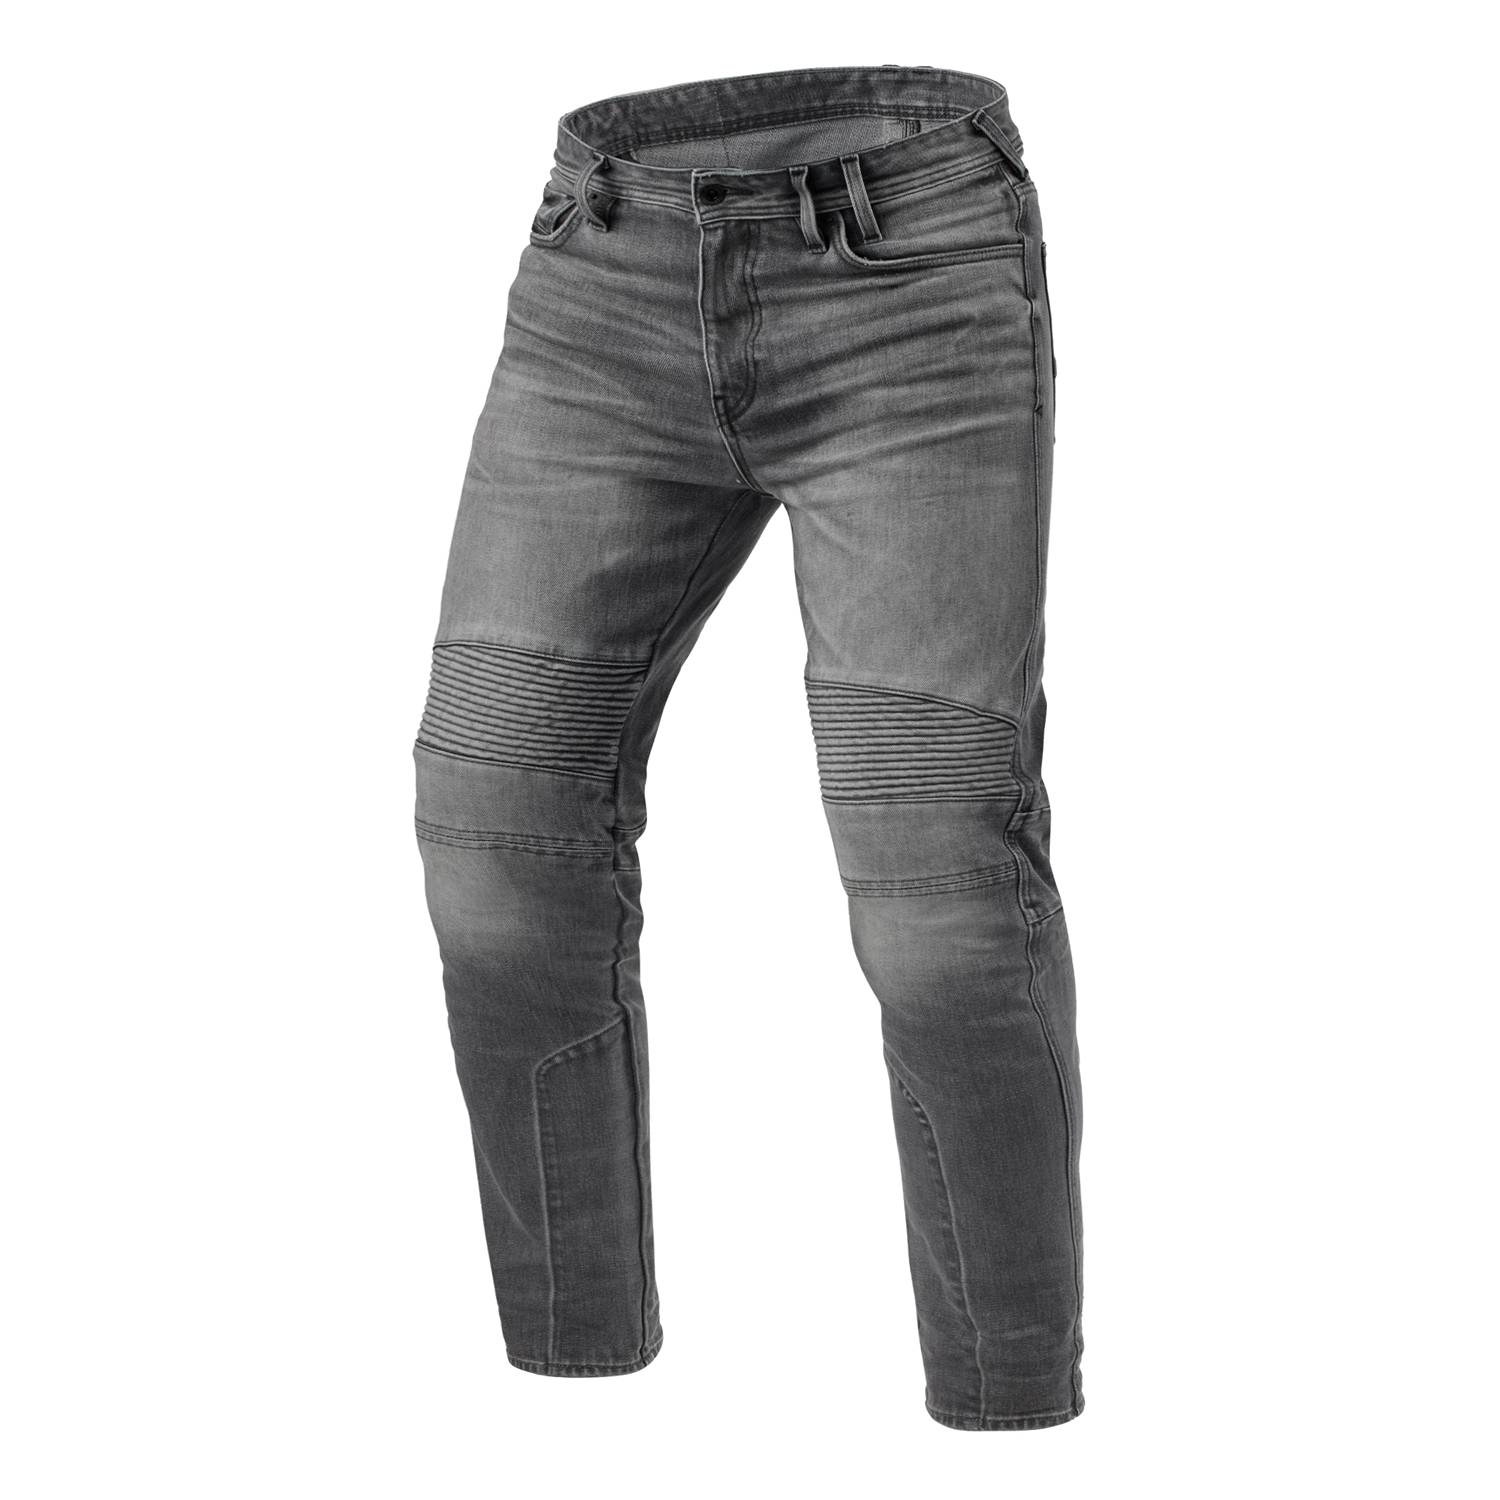 Image of REV'IT! Jeans Moto 2 TF Medium Grey Used L34 Motorcycle Jeans Size L34/W31 EN